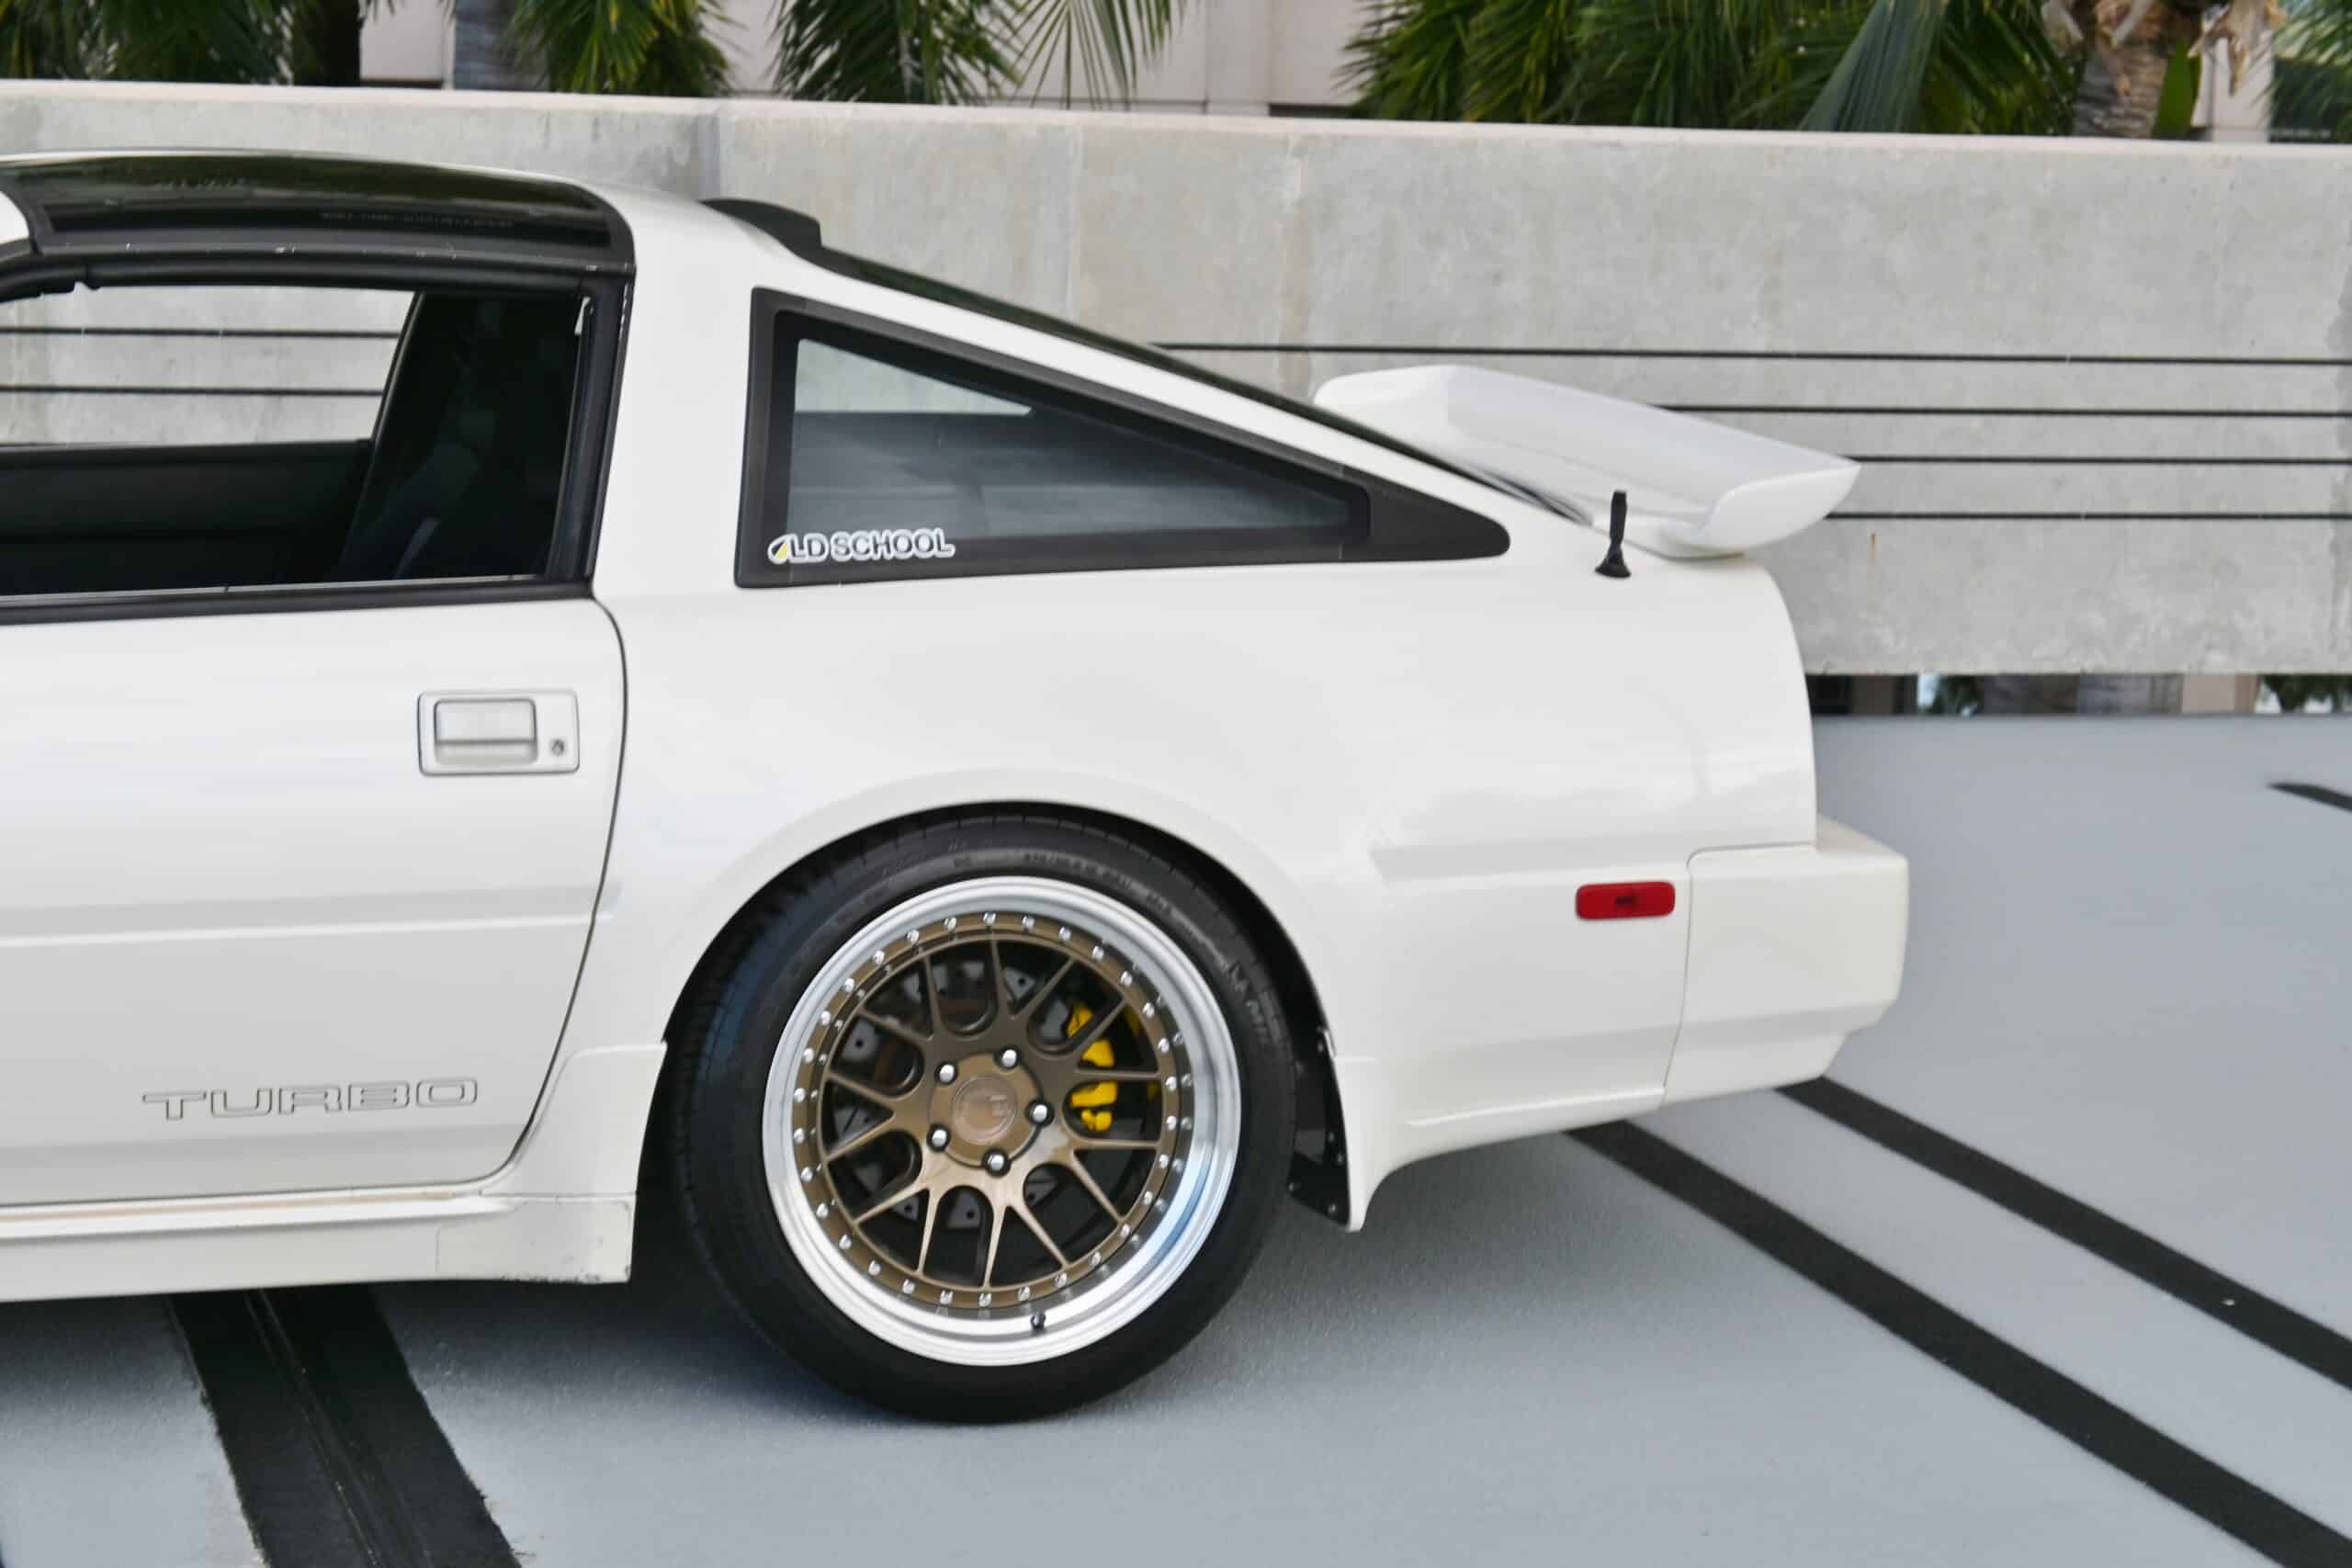 1988 Nissan 300ZX Turbo Shiro #797 Recaro Seats – Coilovers – BC Forged Wheels – Upgraded Turbo 300HP – Nice Mods